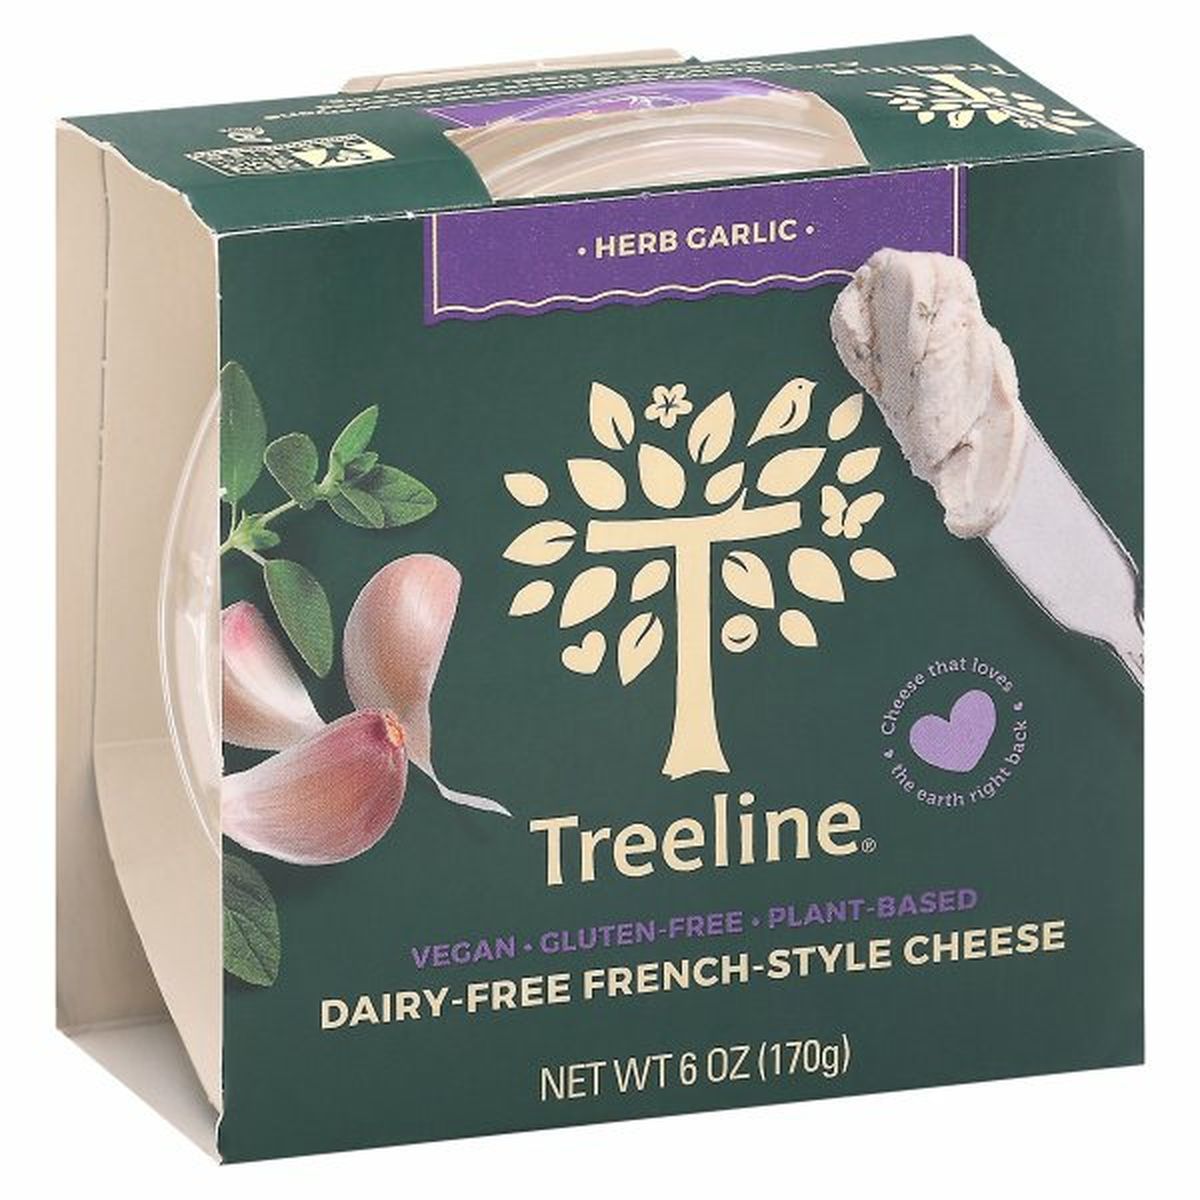 Calories in Treeline Cheese, Herb Garlic